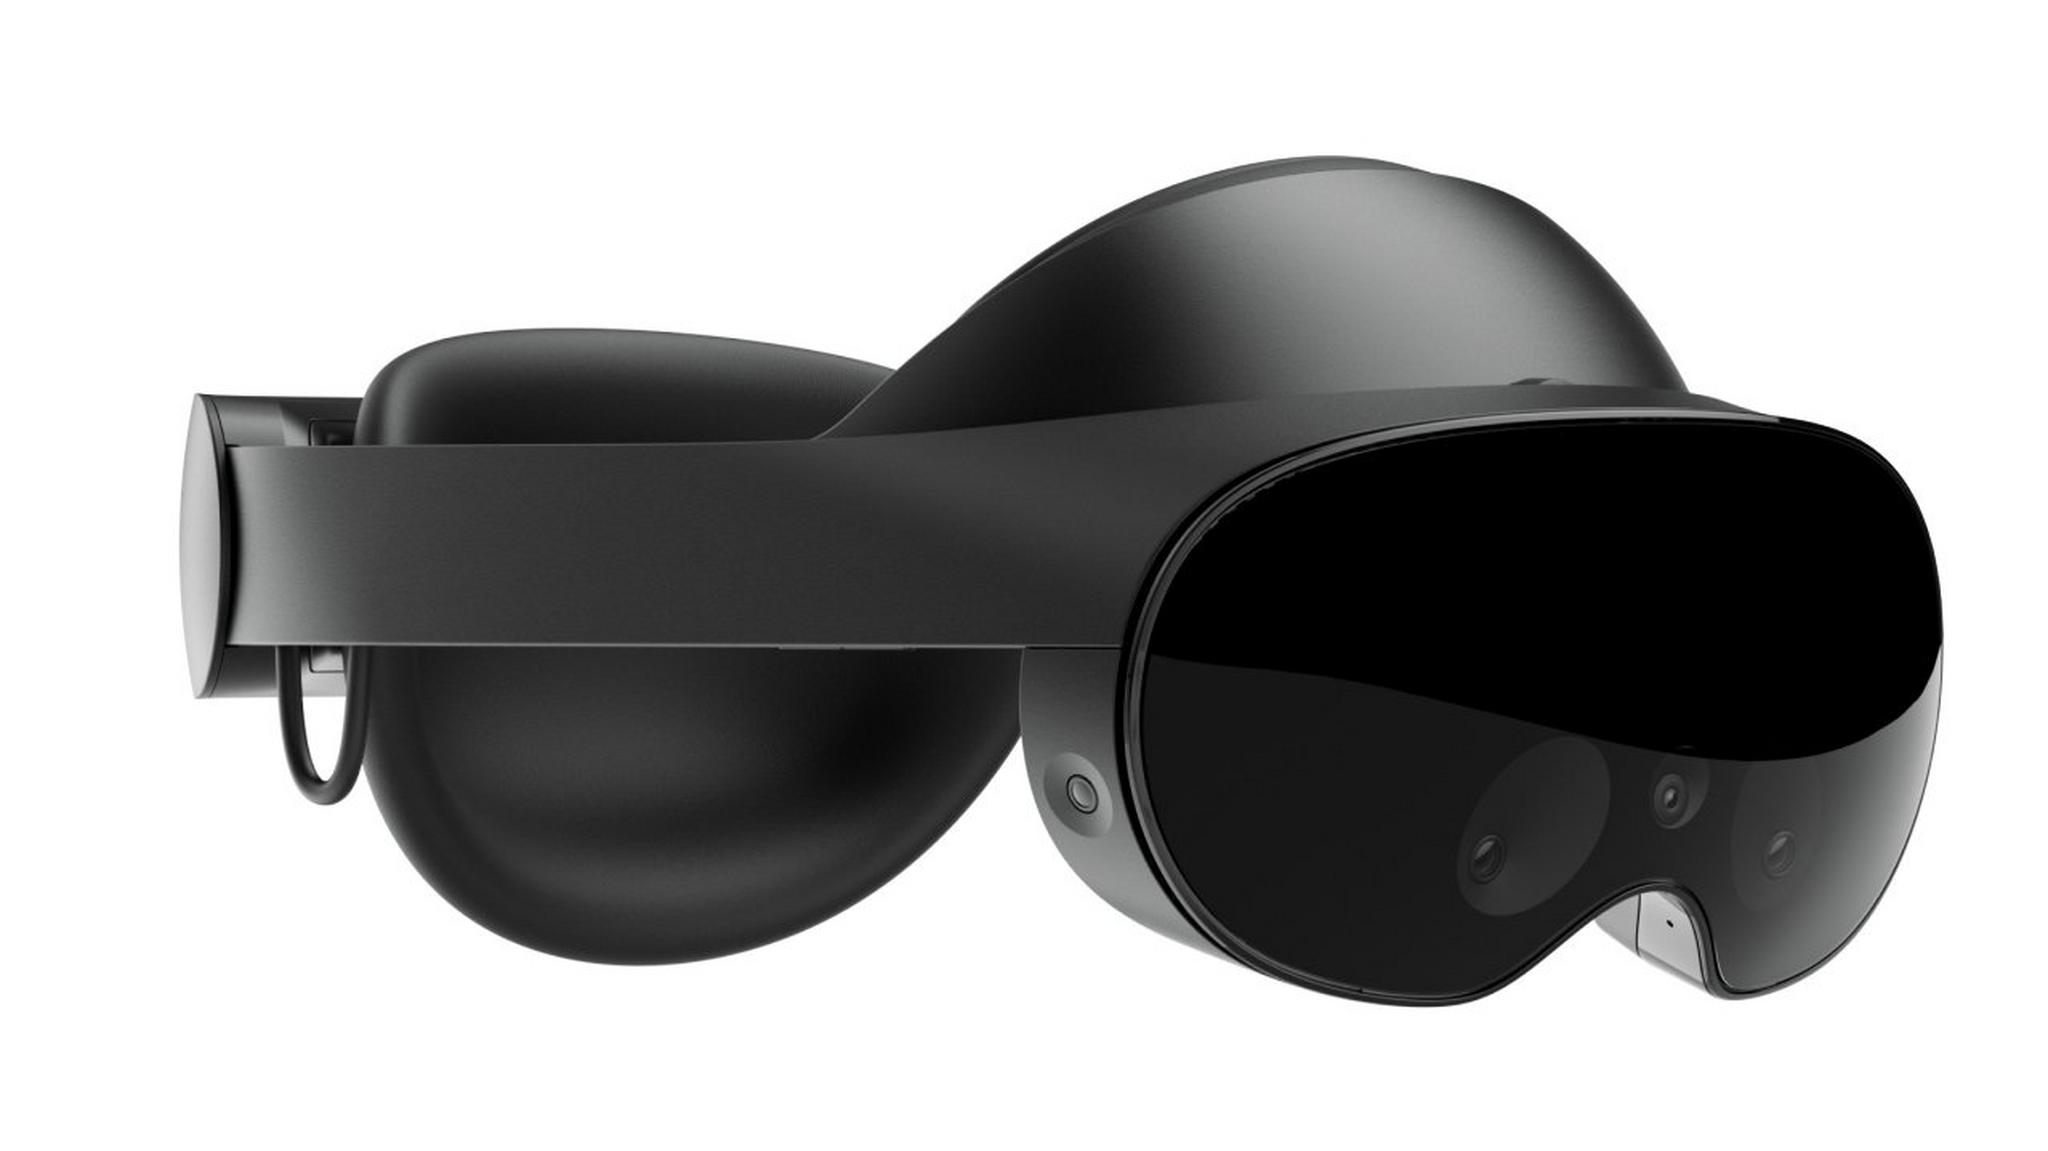 Meta Oculus Quest Pro VR Headset